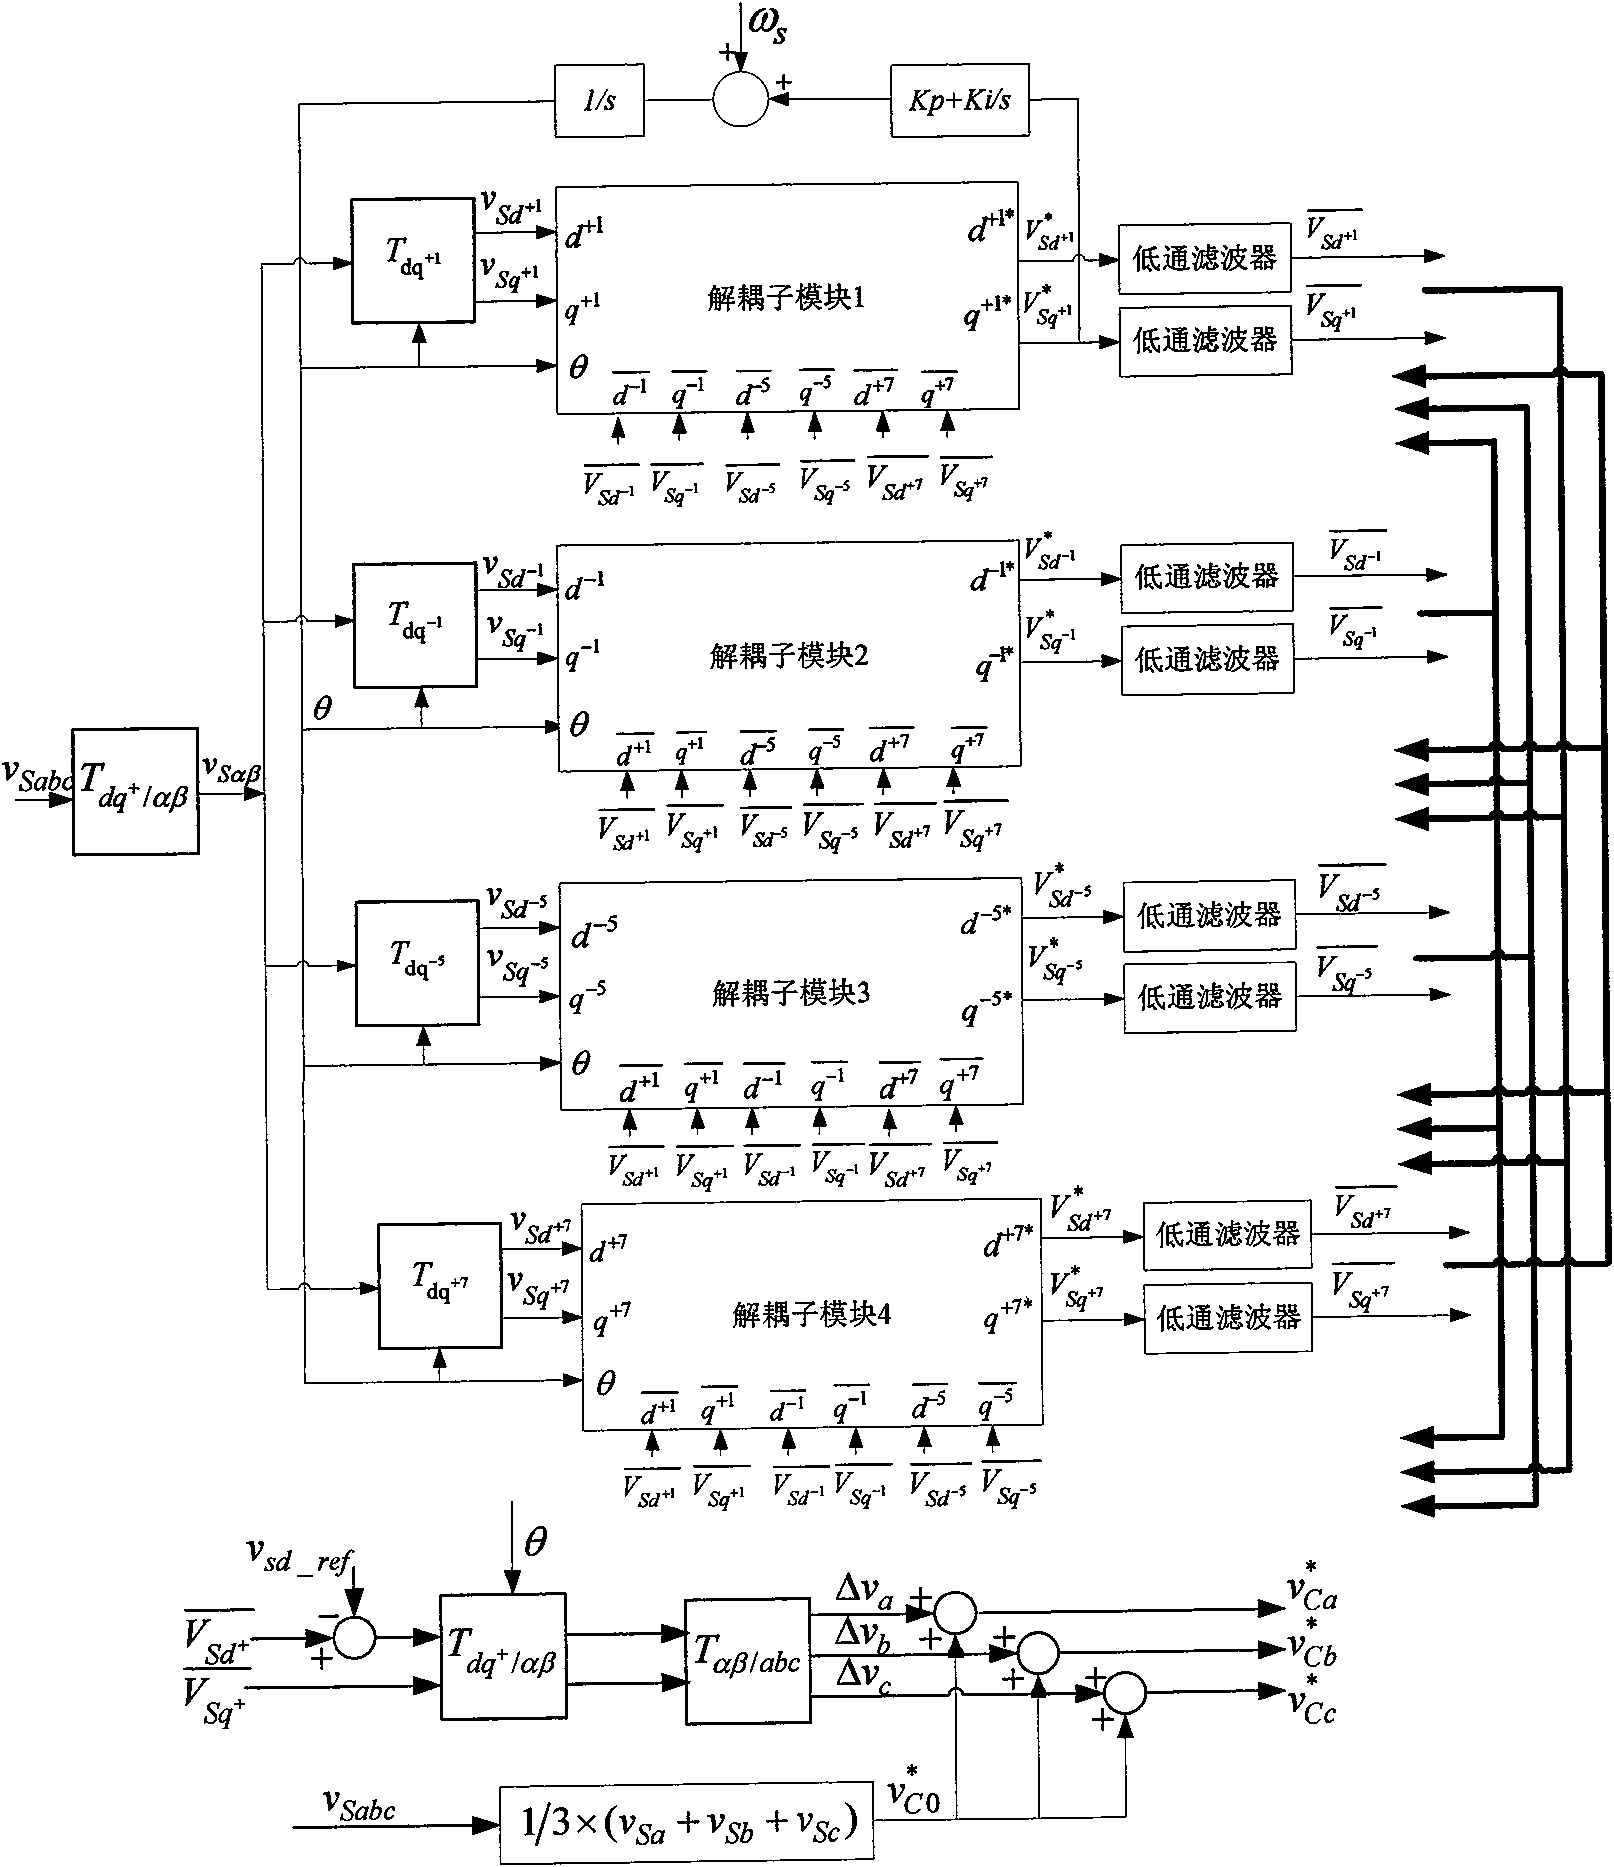 Voltage control method based on phase-lock loop of decoupling multi-coordinate system